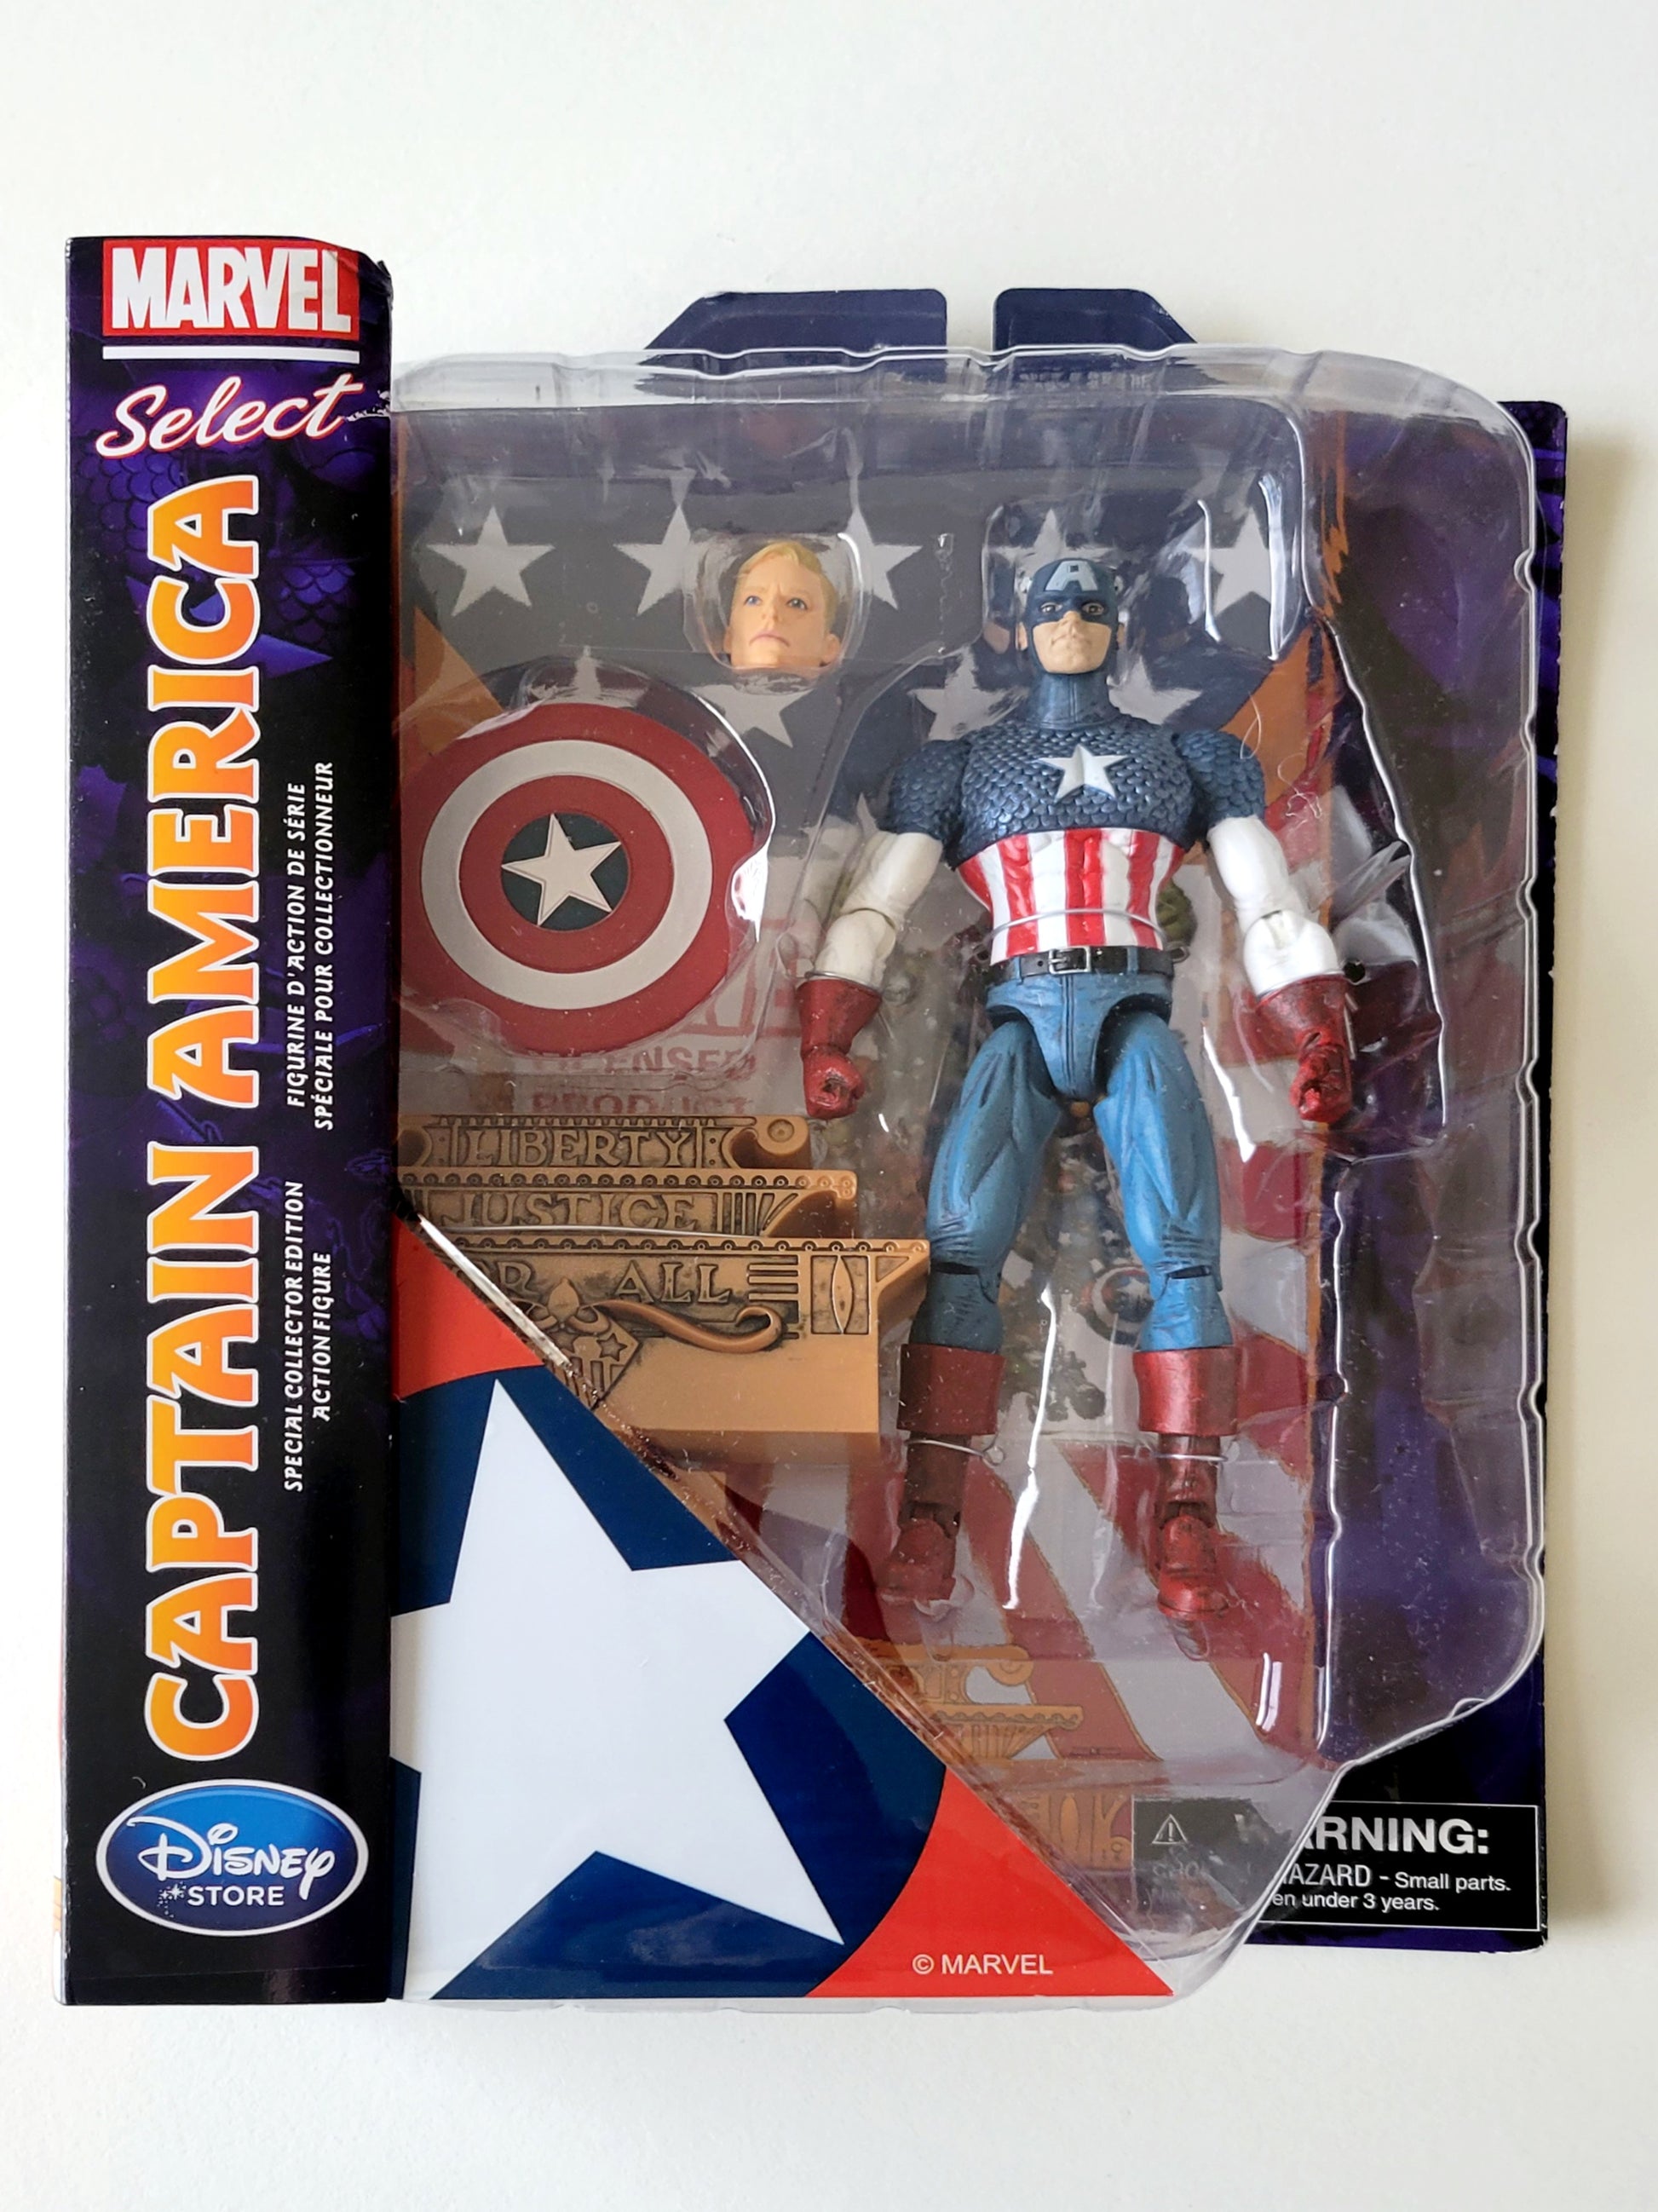 Captain America Toys in Captain America 